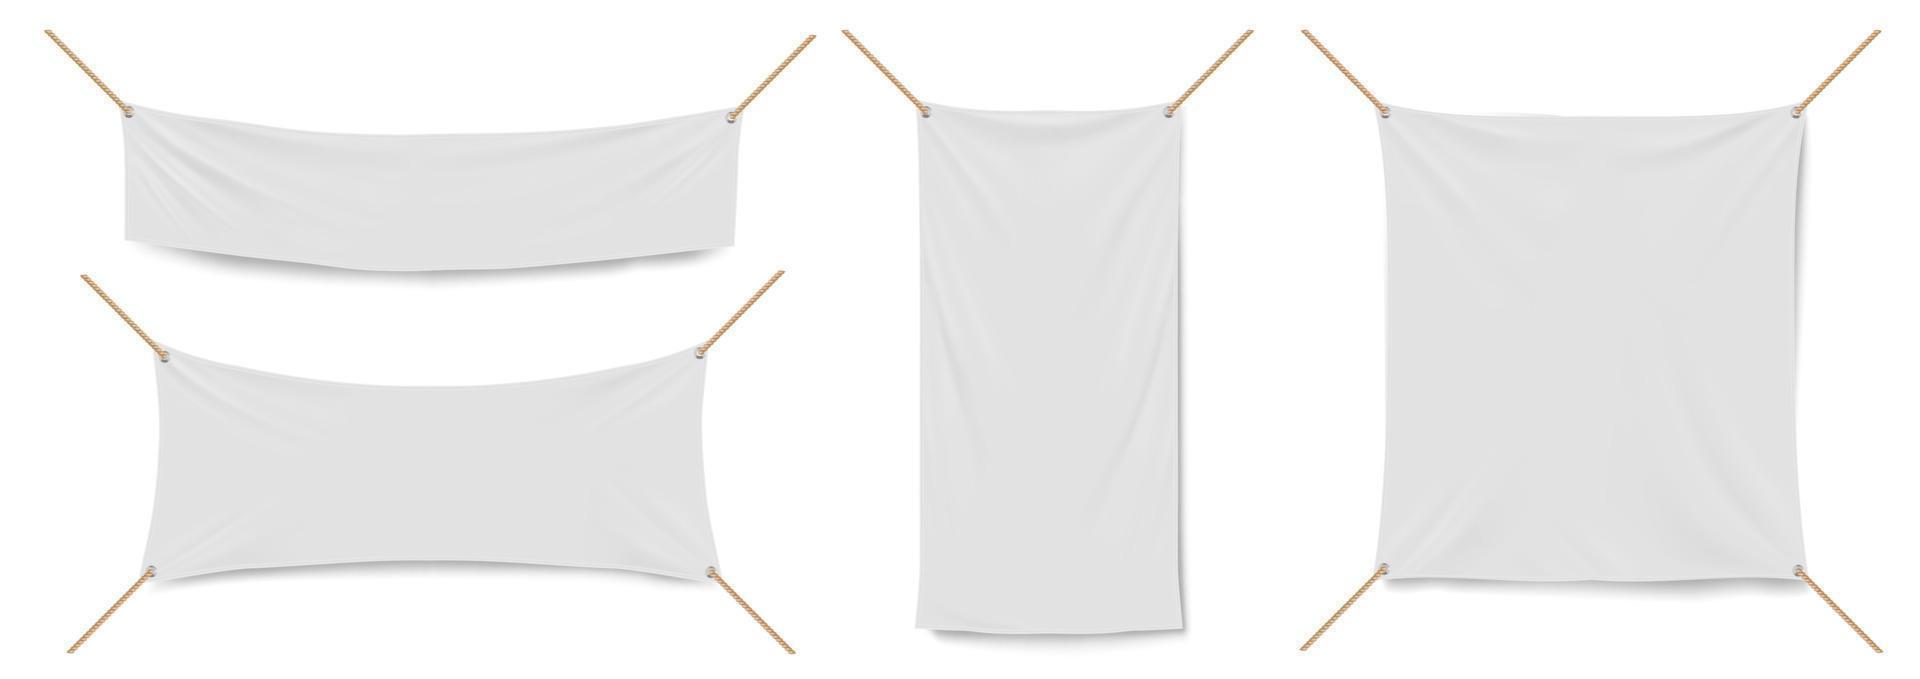 modelo de banners de vinil branco em branco vetor